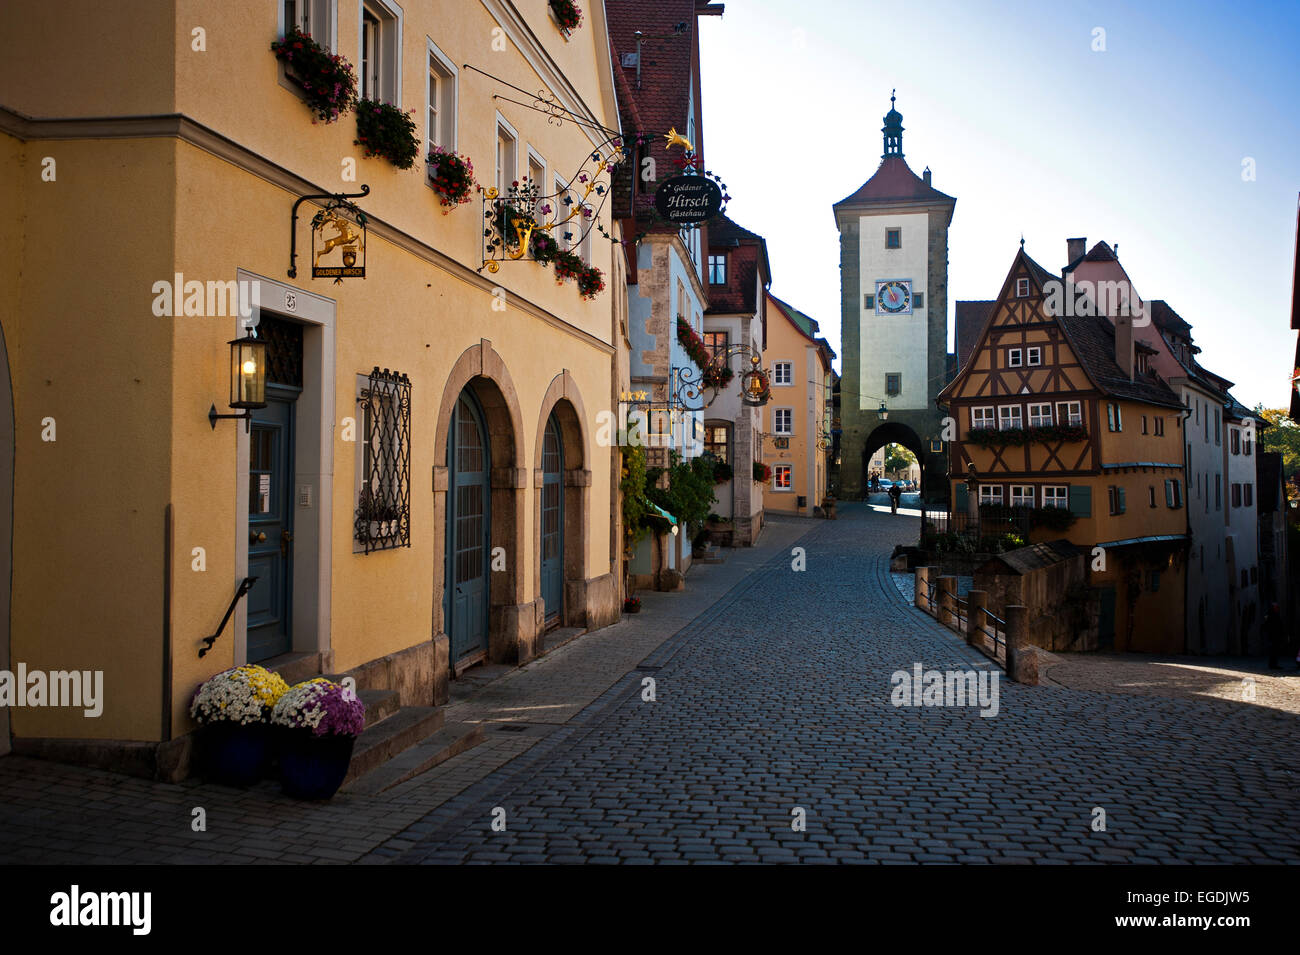 The historic city centre, Rothenburg ob der Tauber, Middle Franconia, Franken, Germany Stock Photo